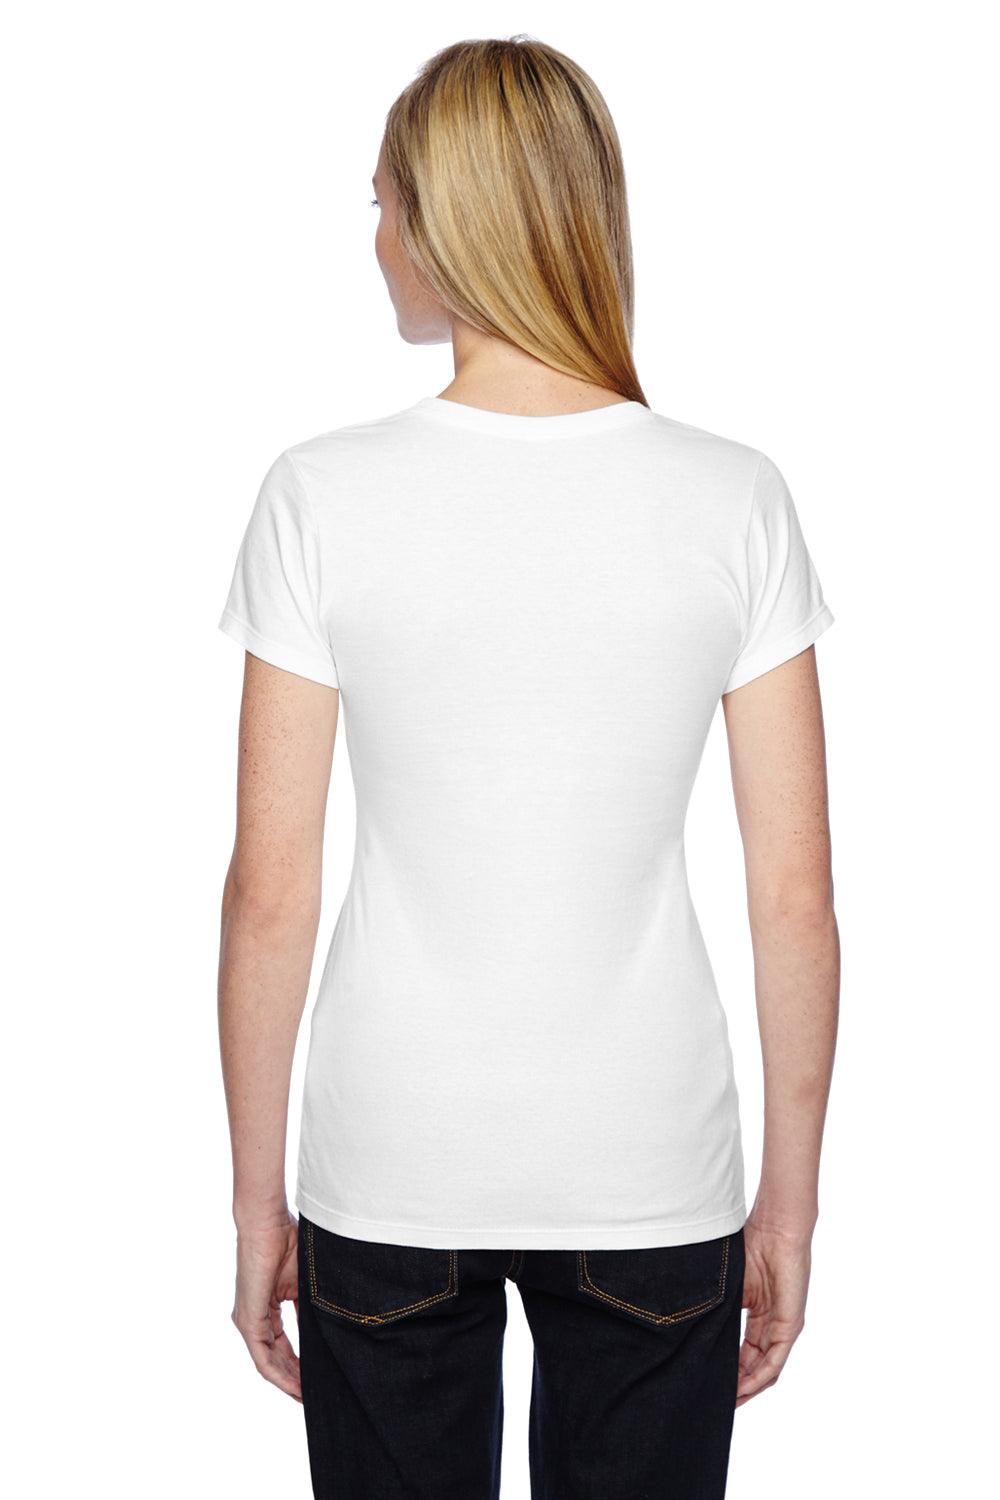 Fruit Of The Loom SSFJR Womens Sofspun Jersey Short Sleeve Crewneck T-Shirt White Back